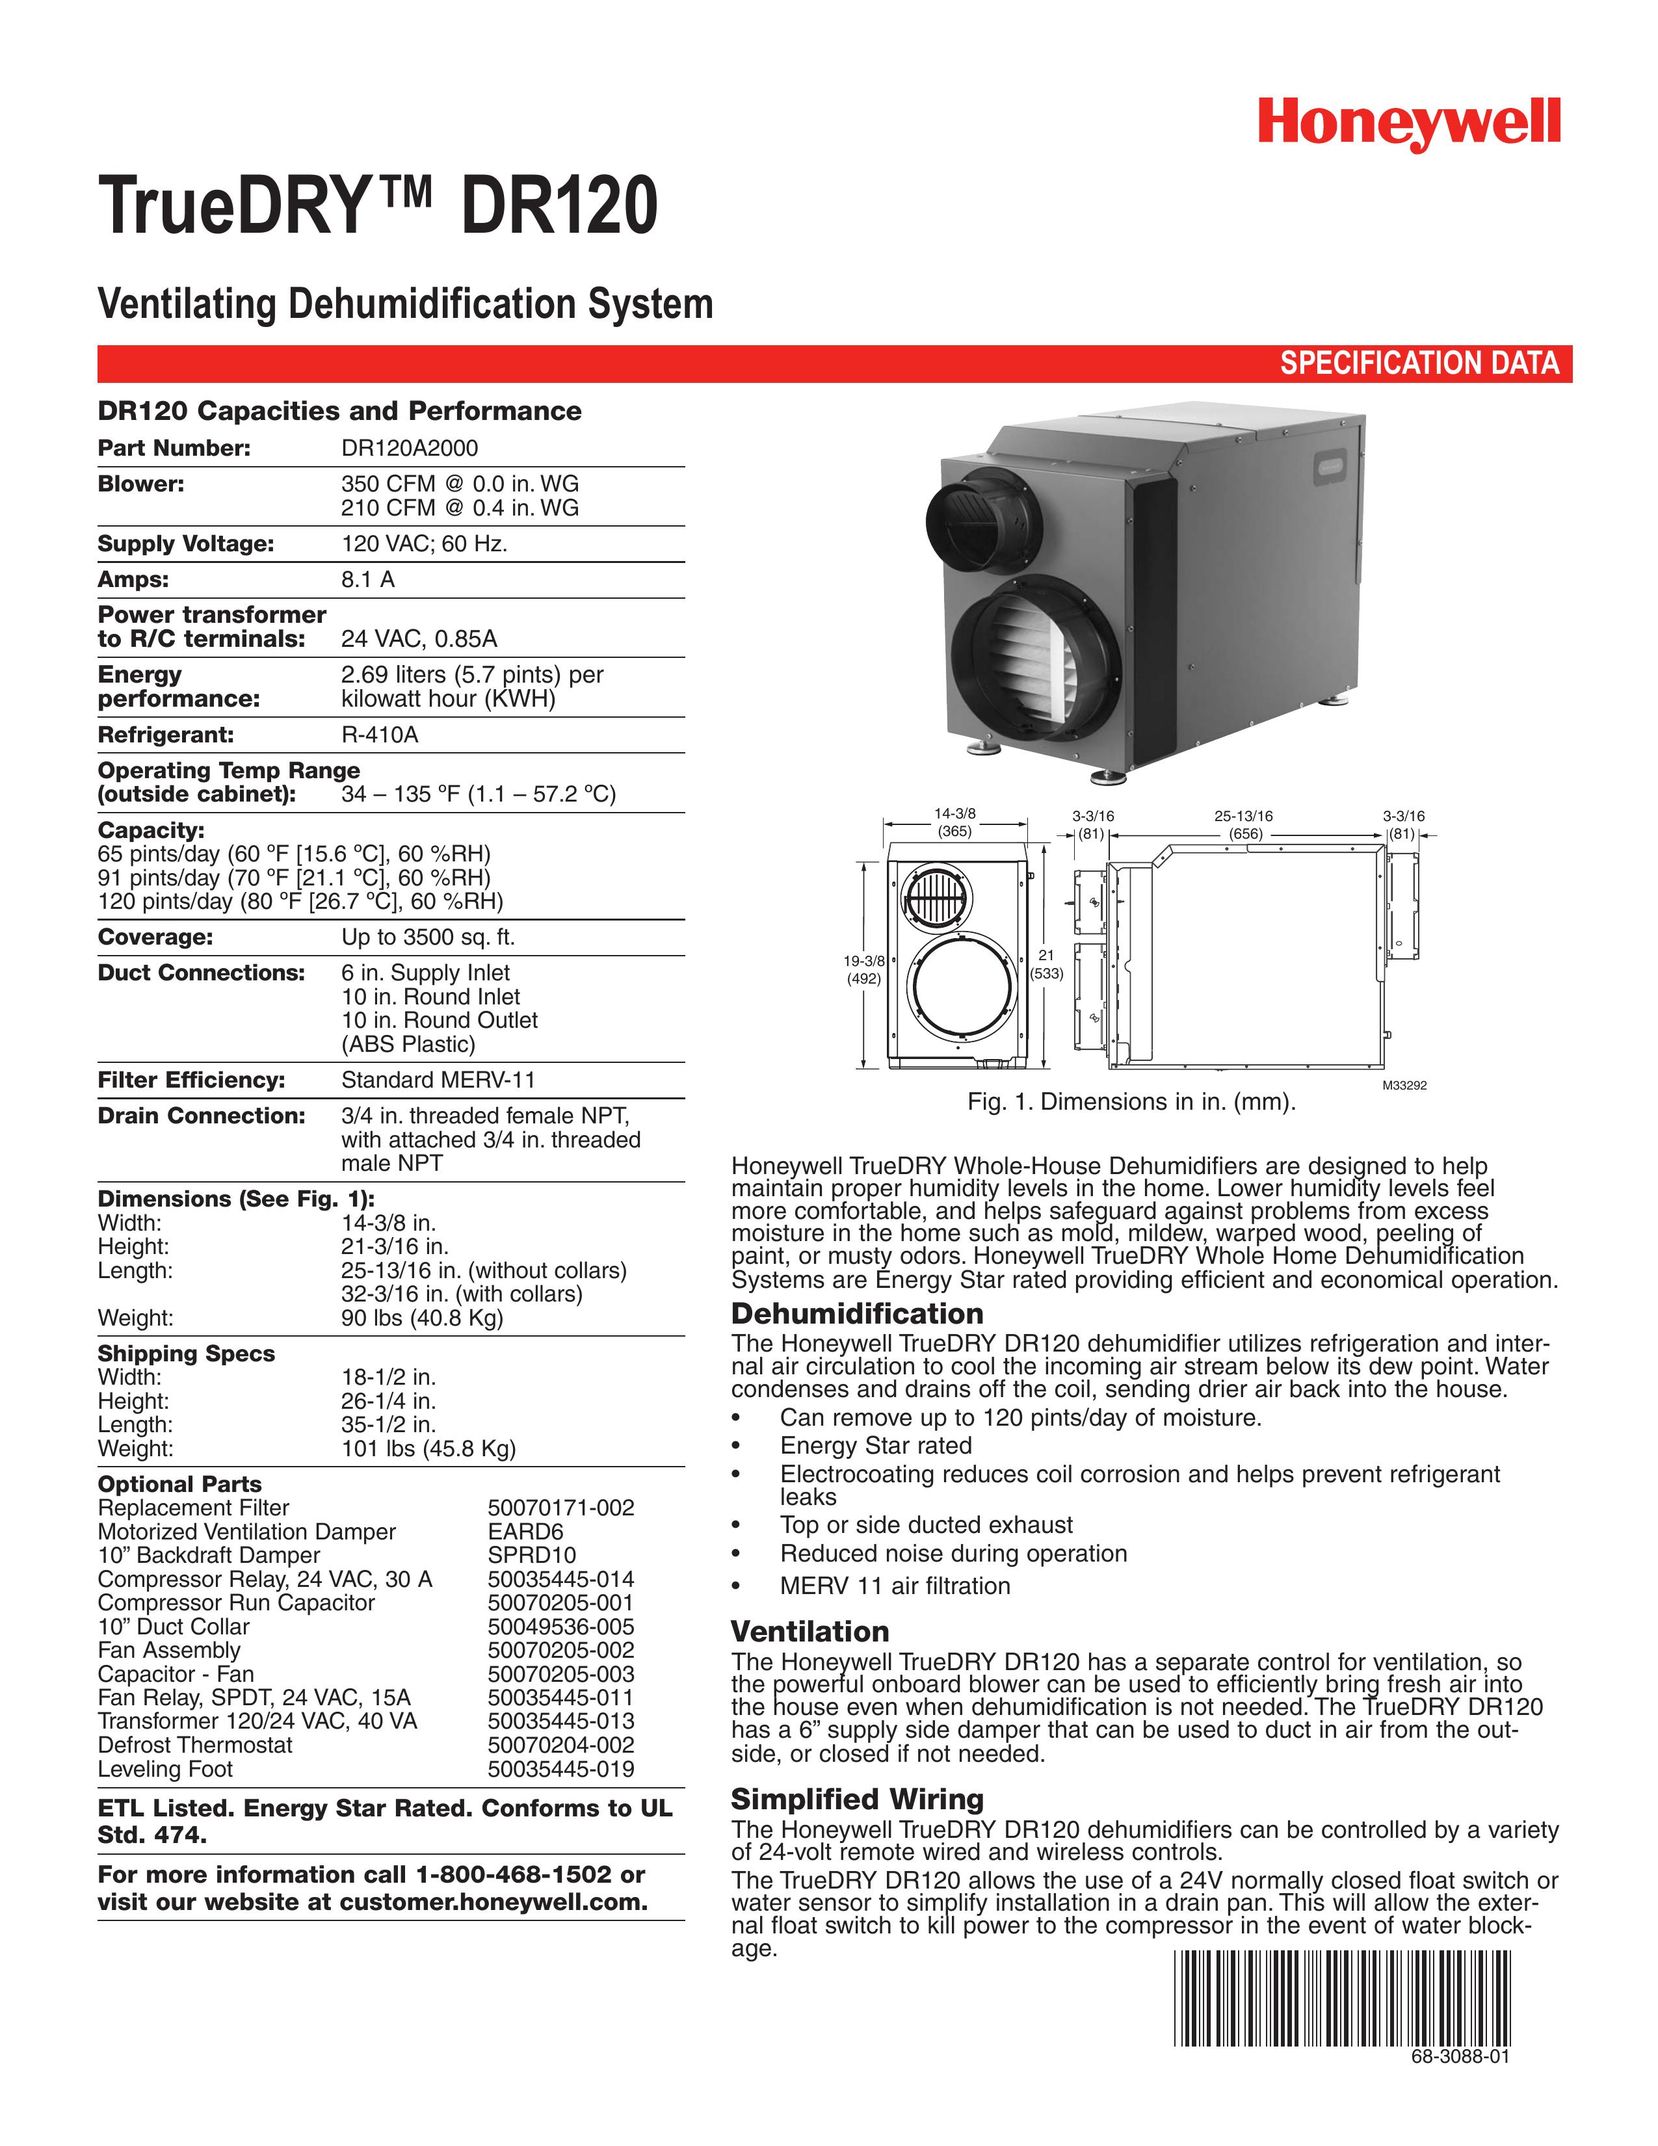 Honeywell DR120 Dehumidifier User Manual